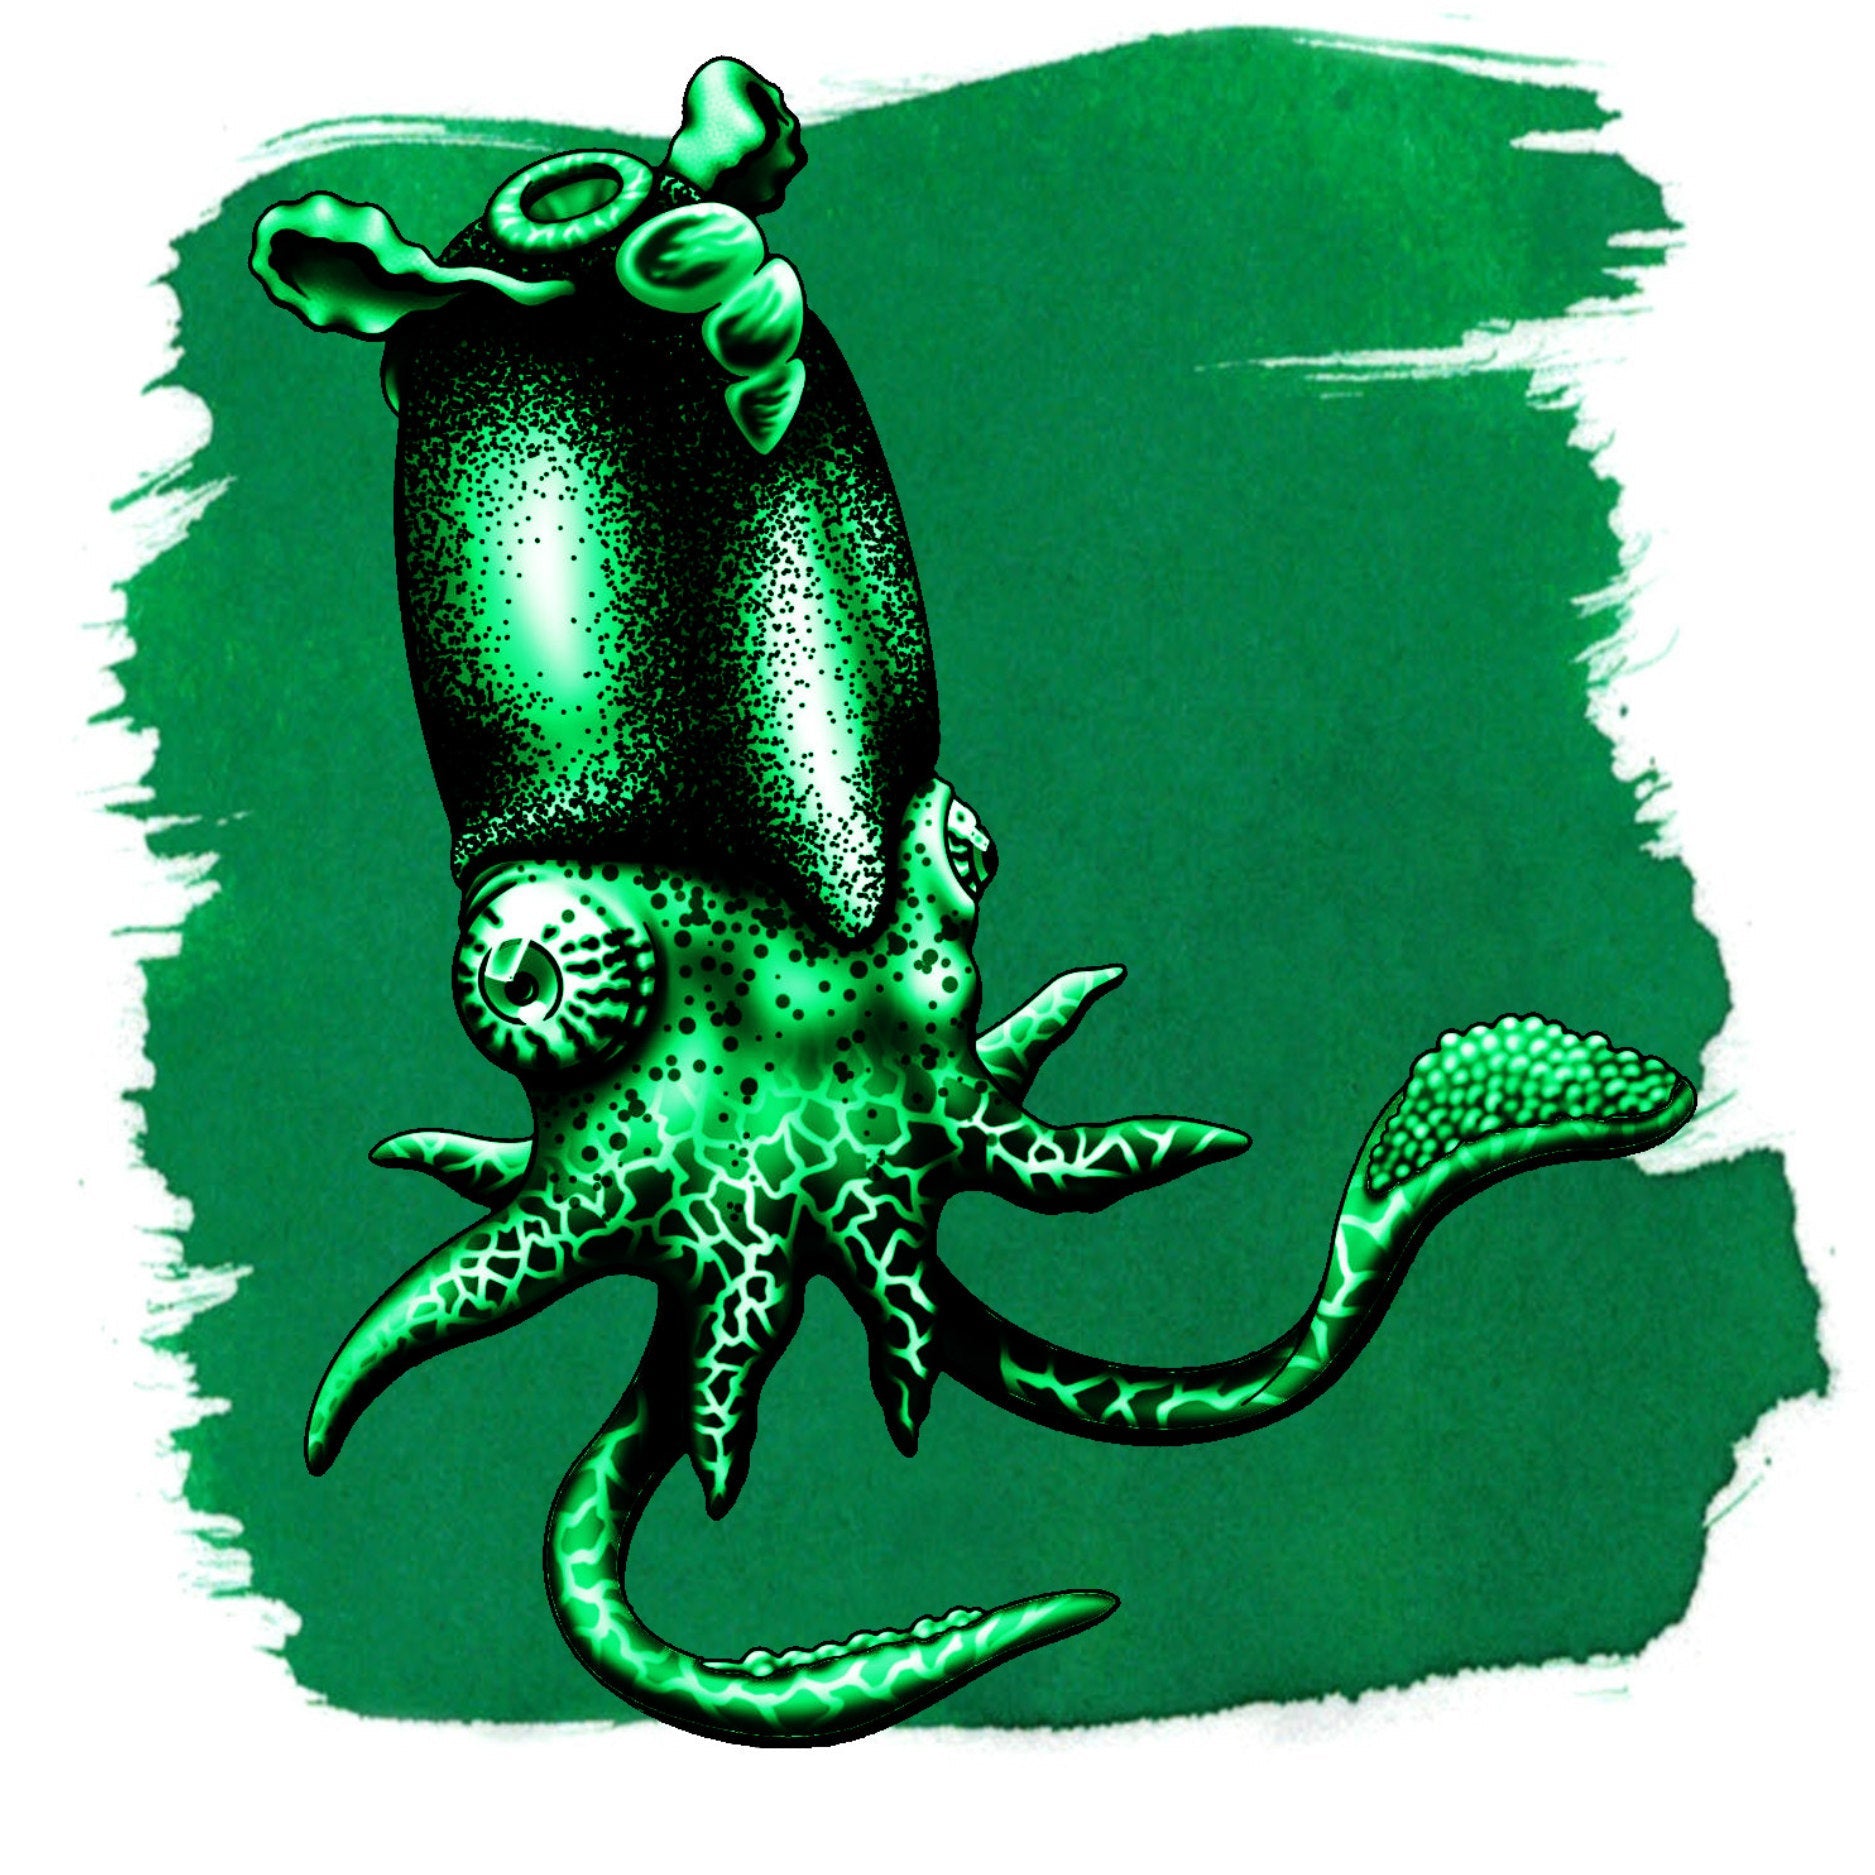 Anderillium Cephalopod Ink - Spirula Green - 1.5 oz-Pen Boutique Ltd